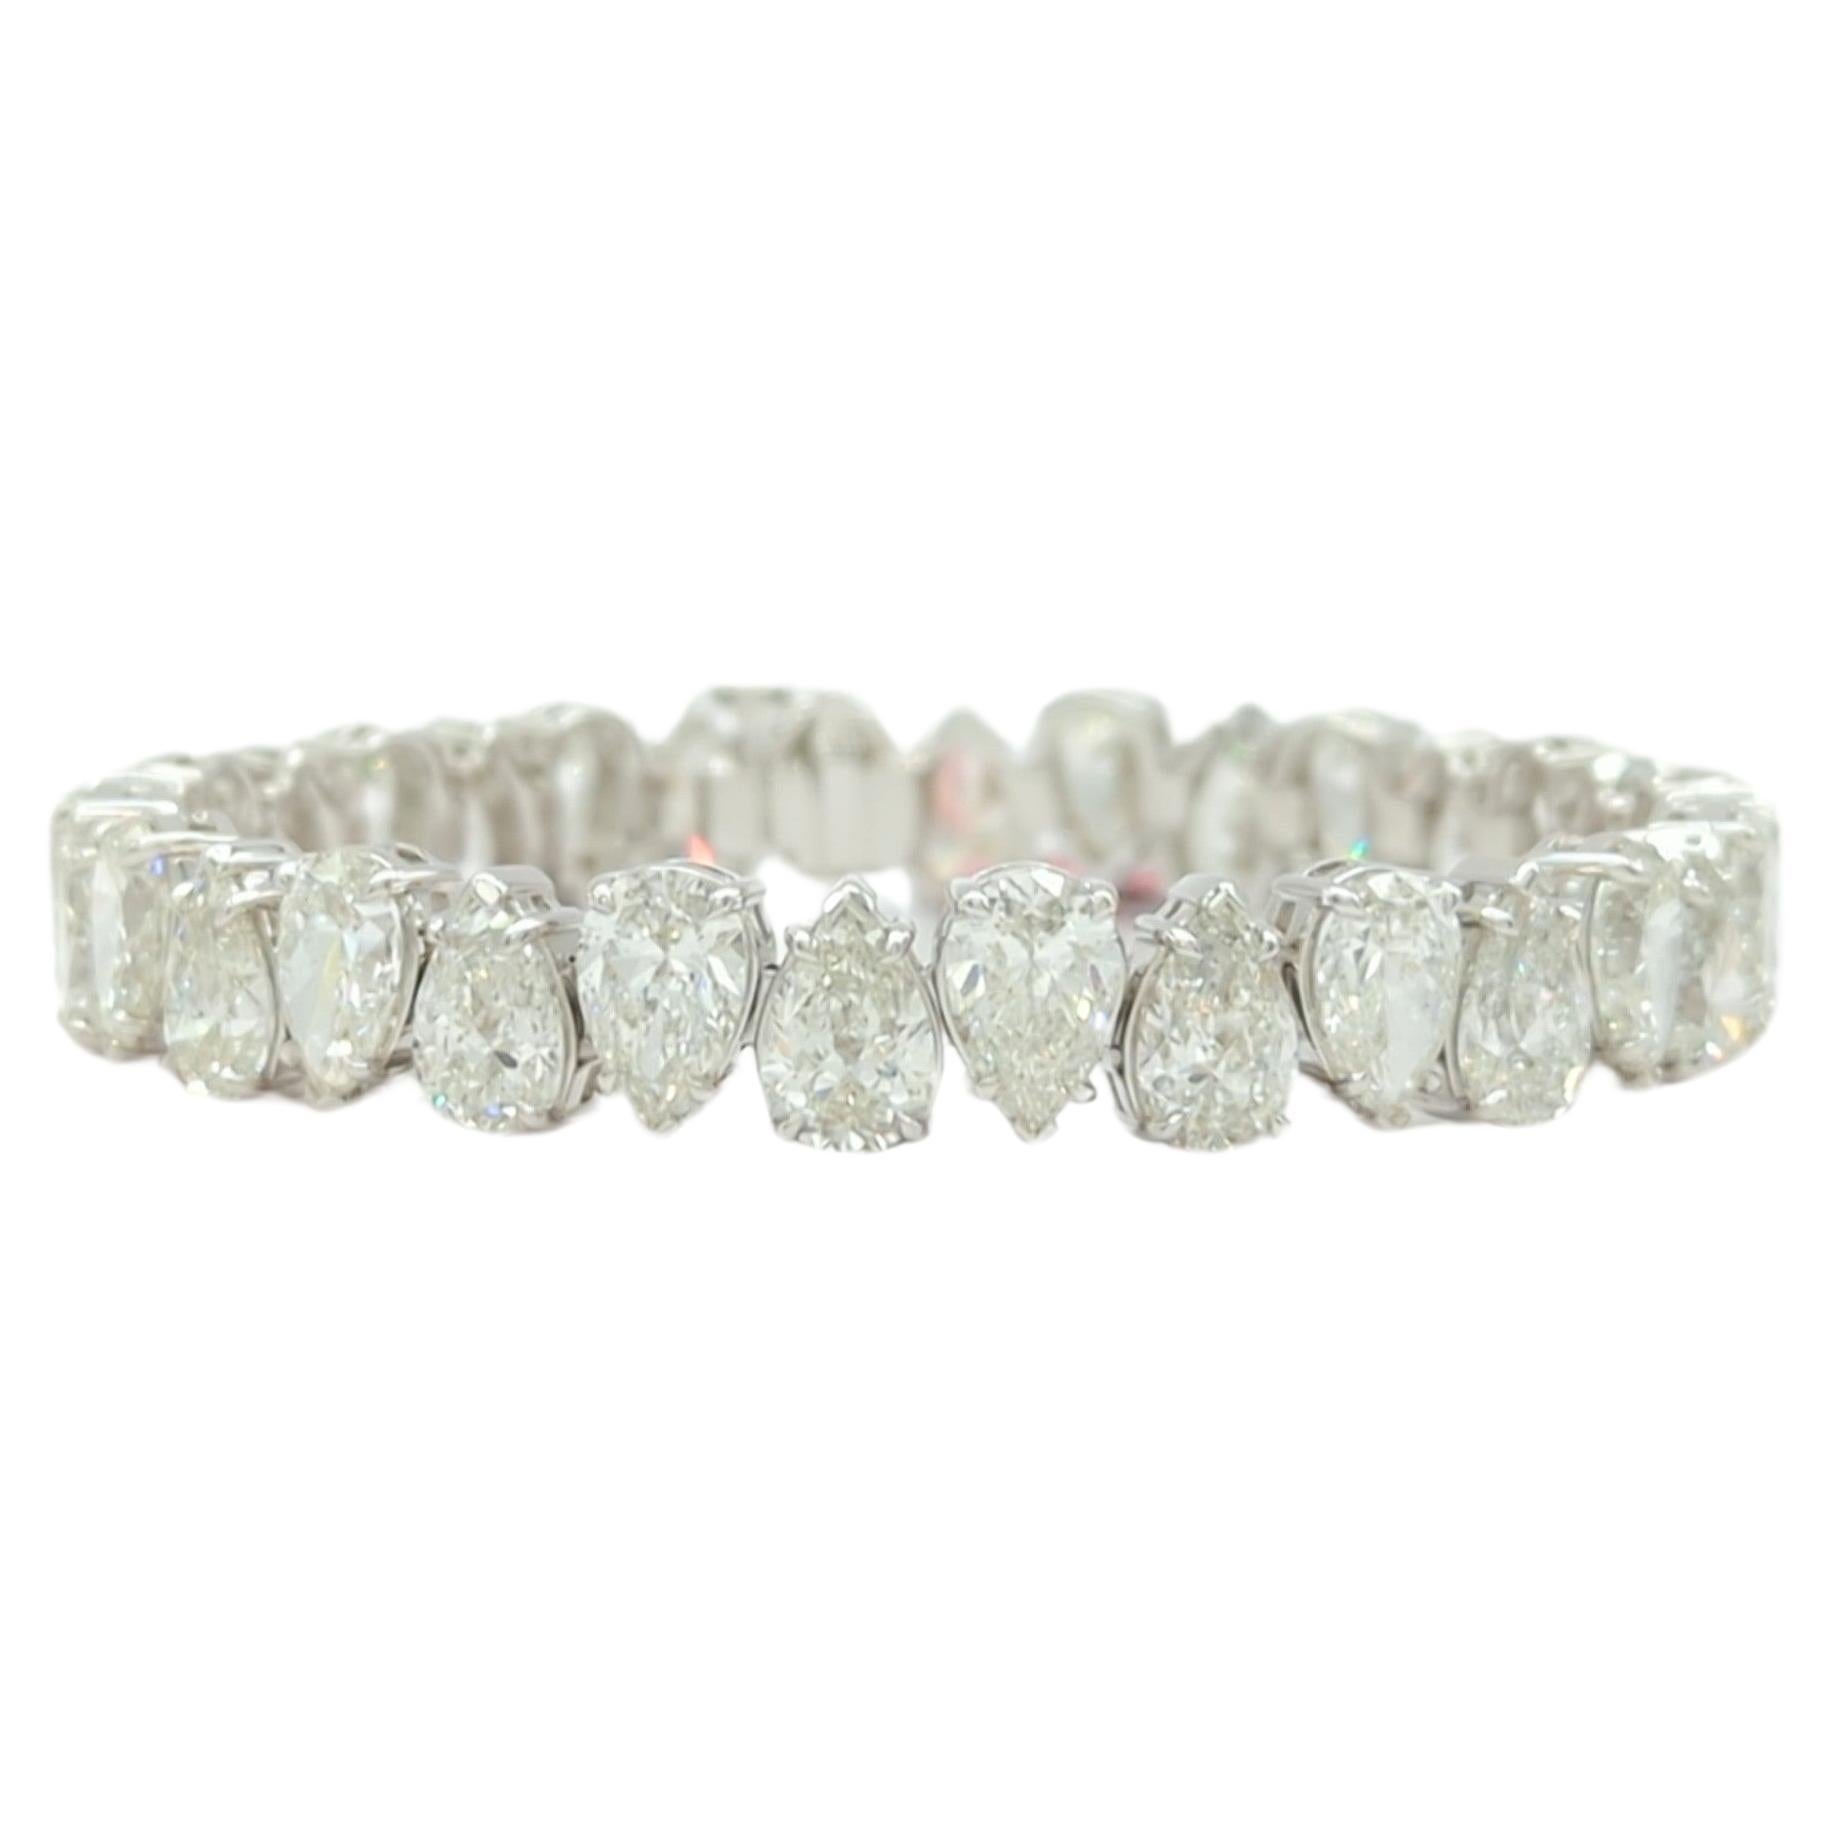 GIA 1 Carat Each White Diamond Pear Shape Tennis Bracelet in 18K White Gold